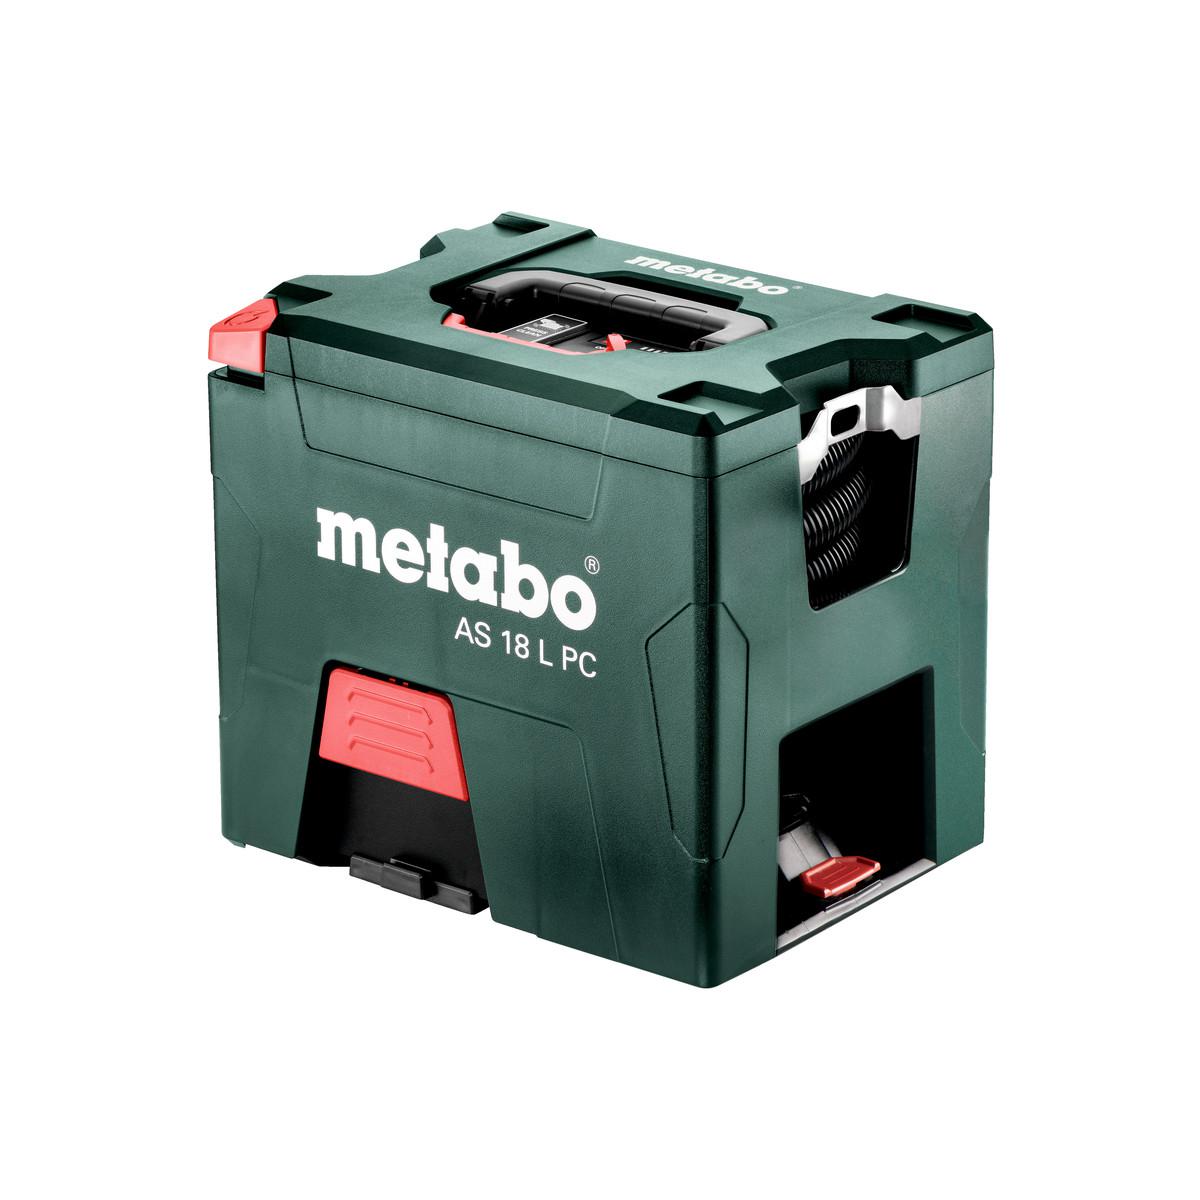 Metabo - Metabo - Aspirateur sans fil 18 V 2x5.2Ah - AS 18 L PC - Aspirateurs industriels